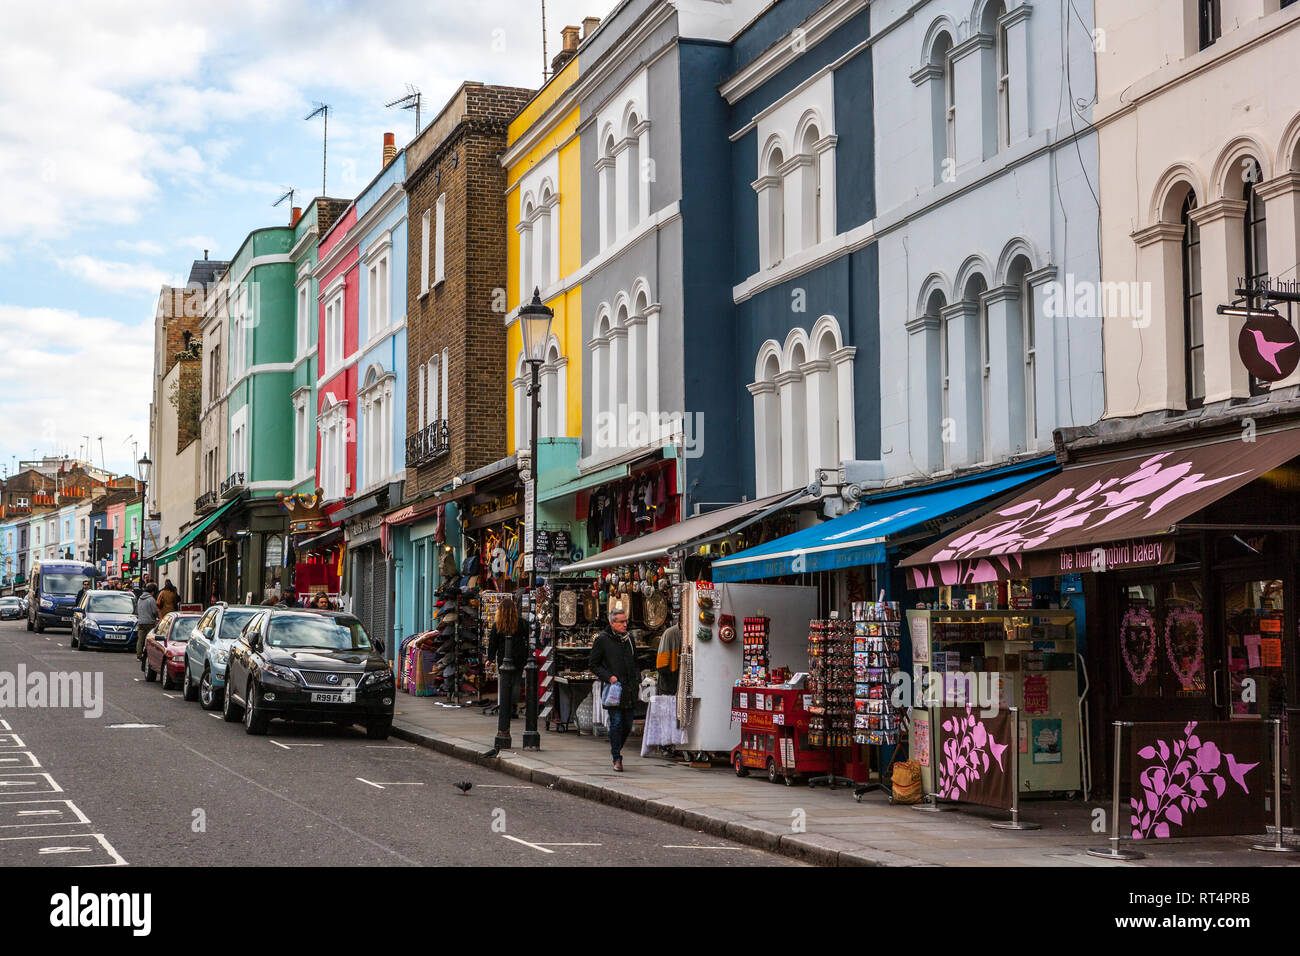 Bunte Geschäfte und Häuser, Portobello Road, Notting Hill, London Stockfoto